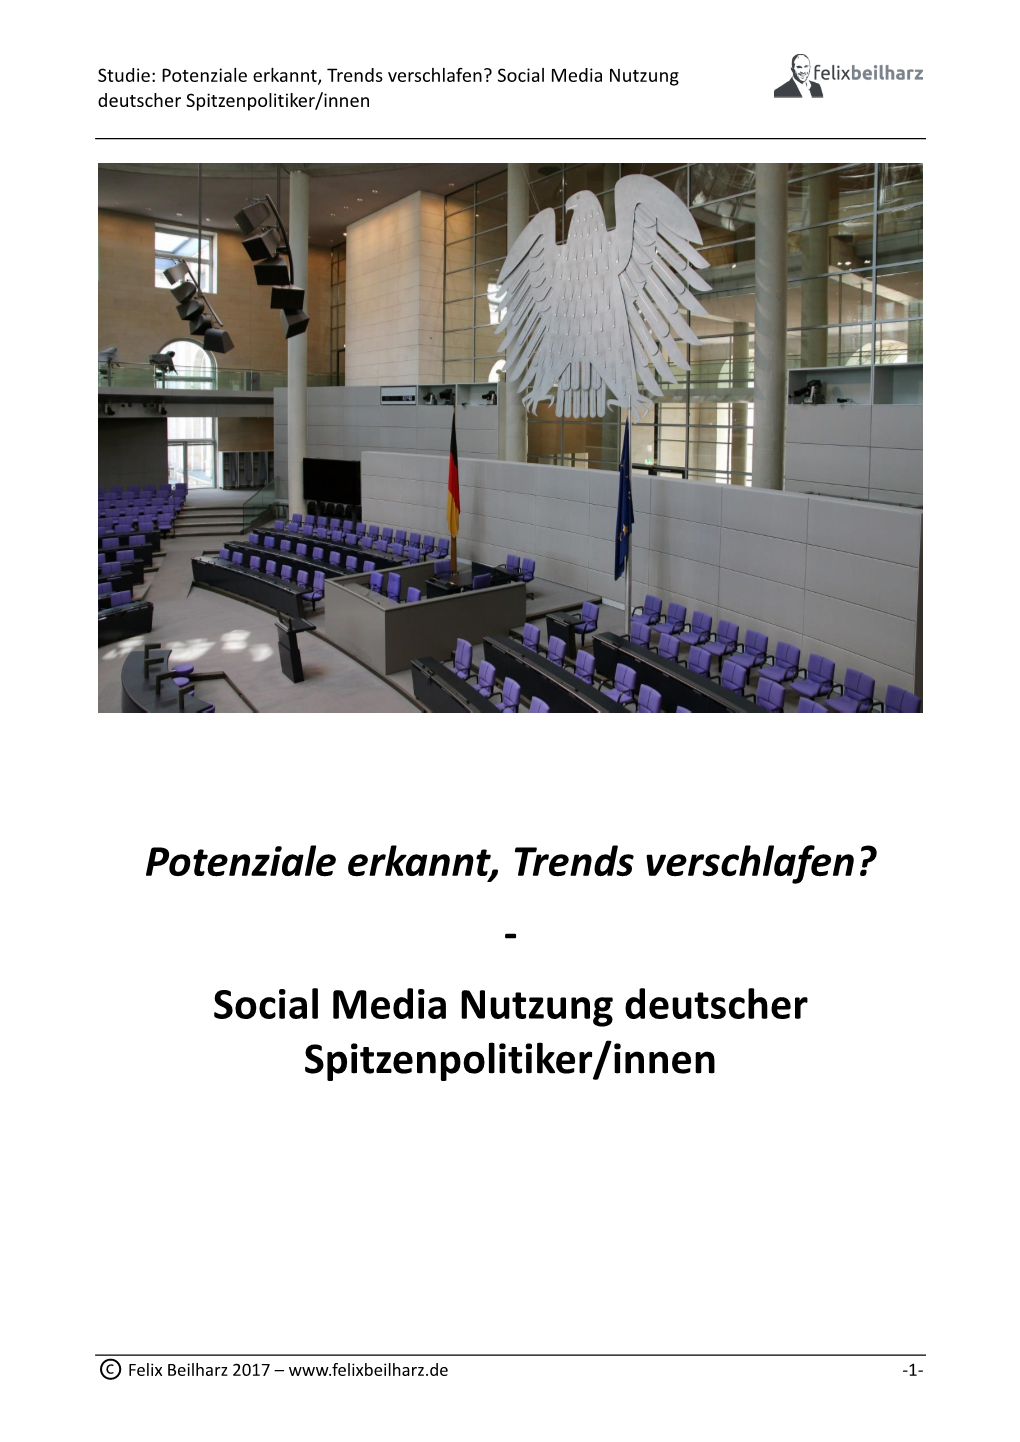 Potenziale Erkannt, Trends Verschlafen? Social Media Nutzung Deutscher Spitzenpolitiker/Innen